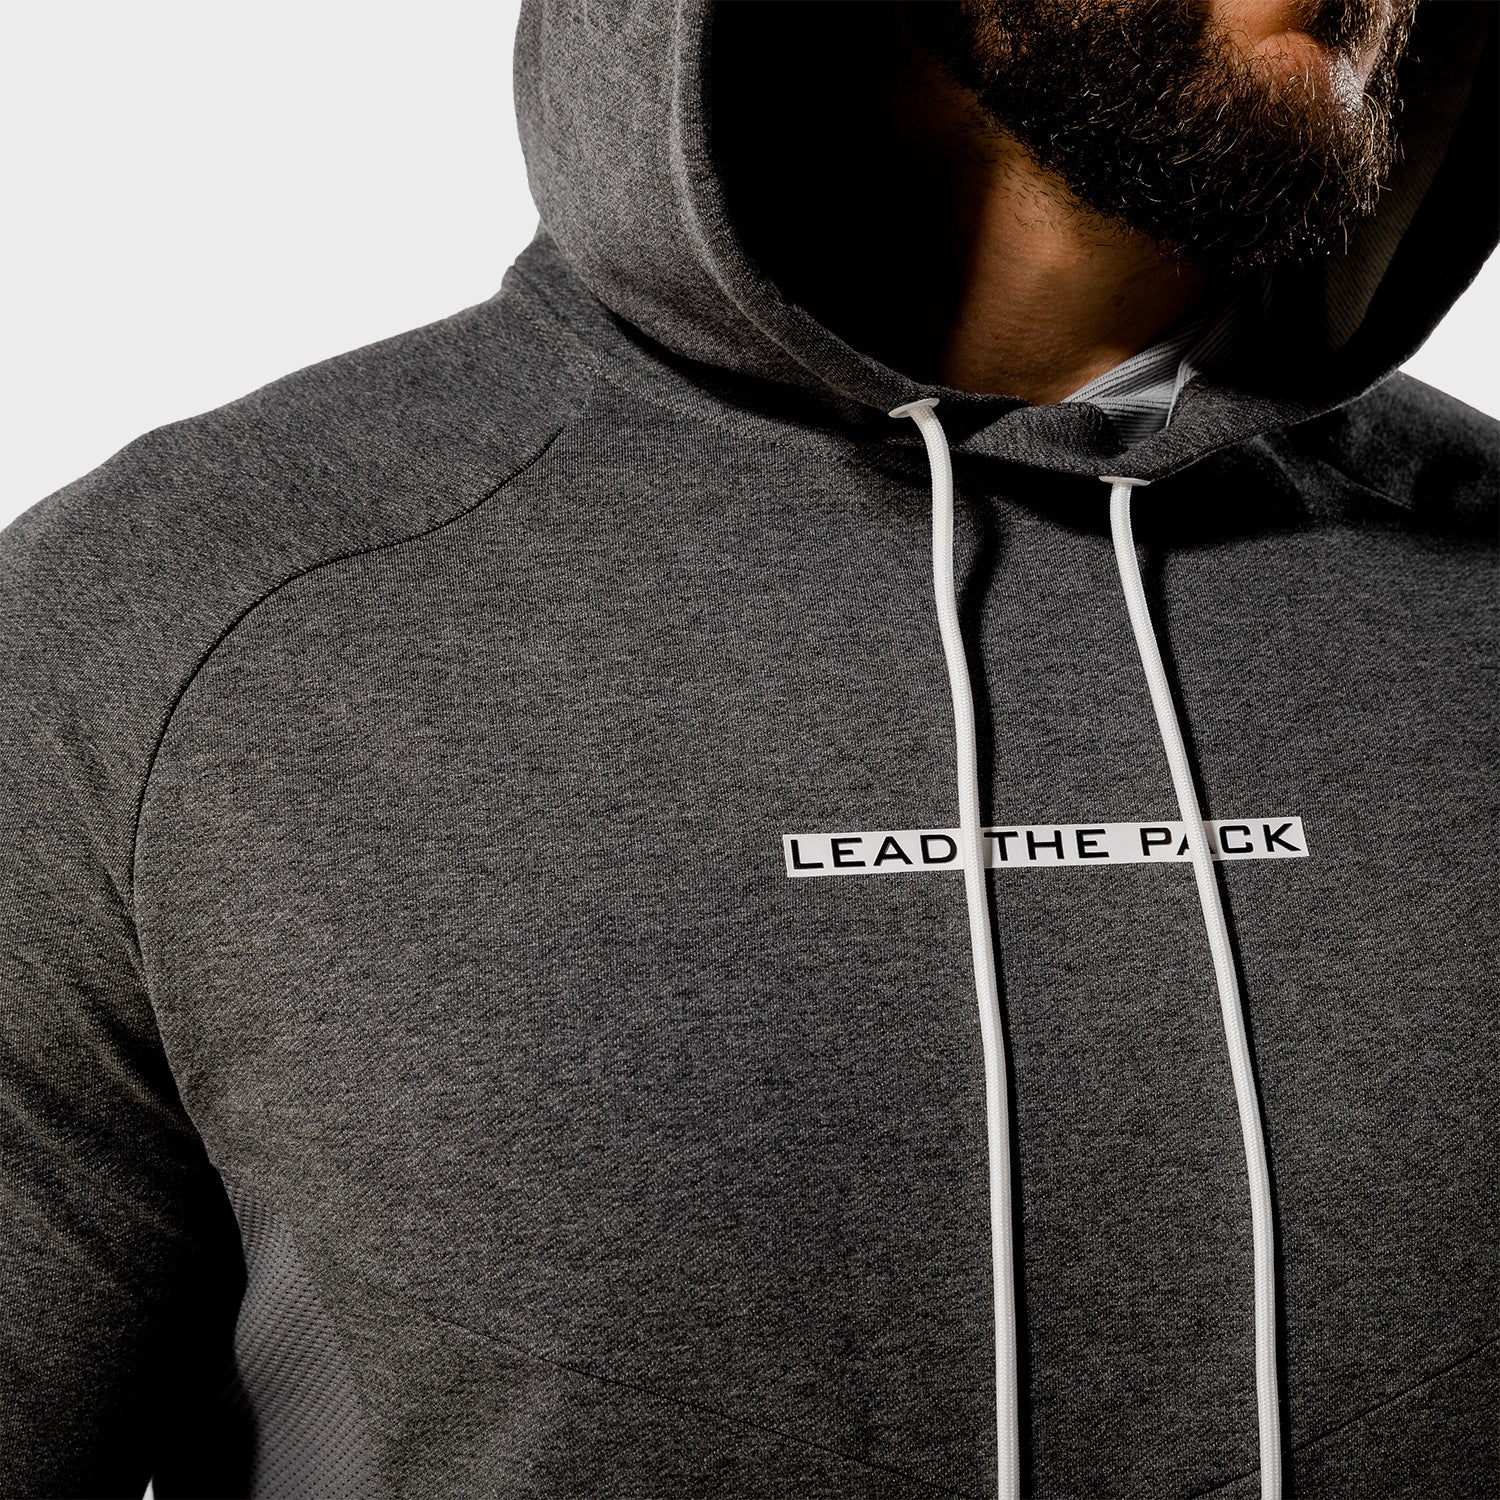 squatwolf-gym-wear-statement-hoodie-grey-workout-hoodies-for-men